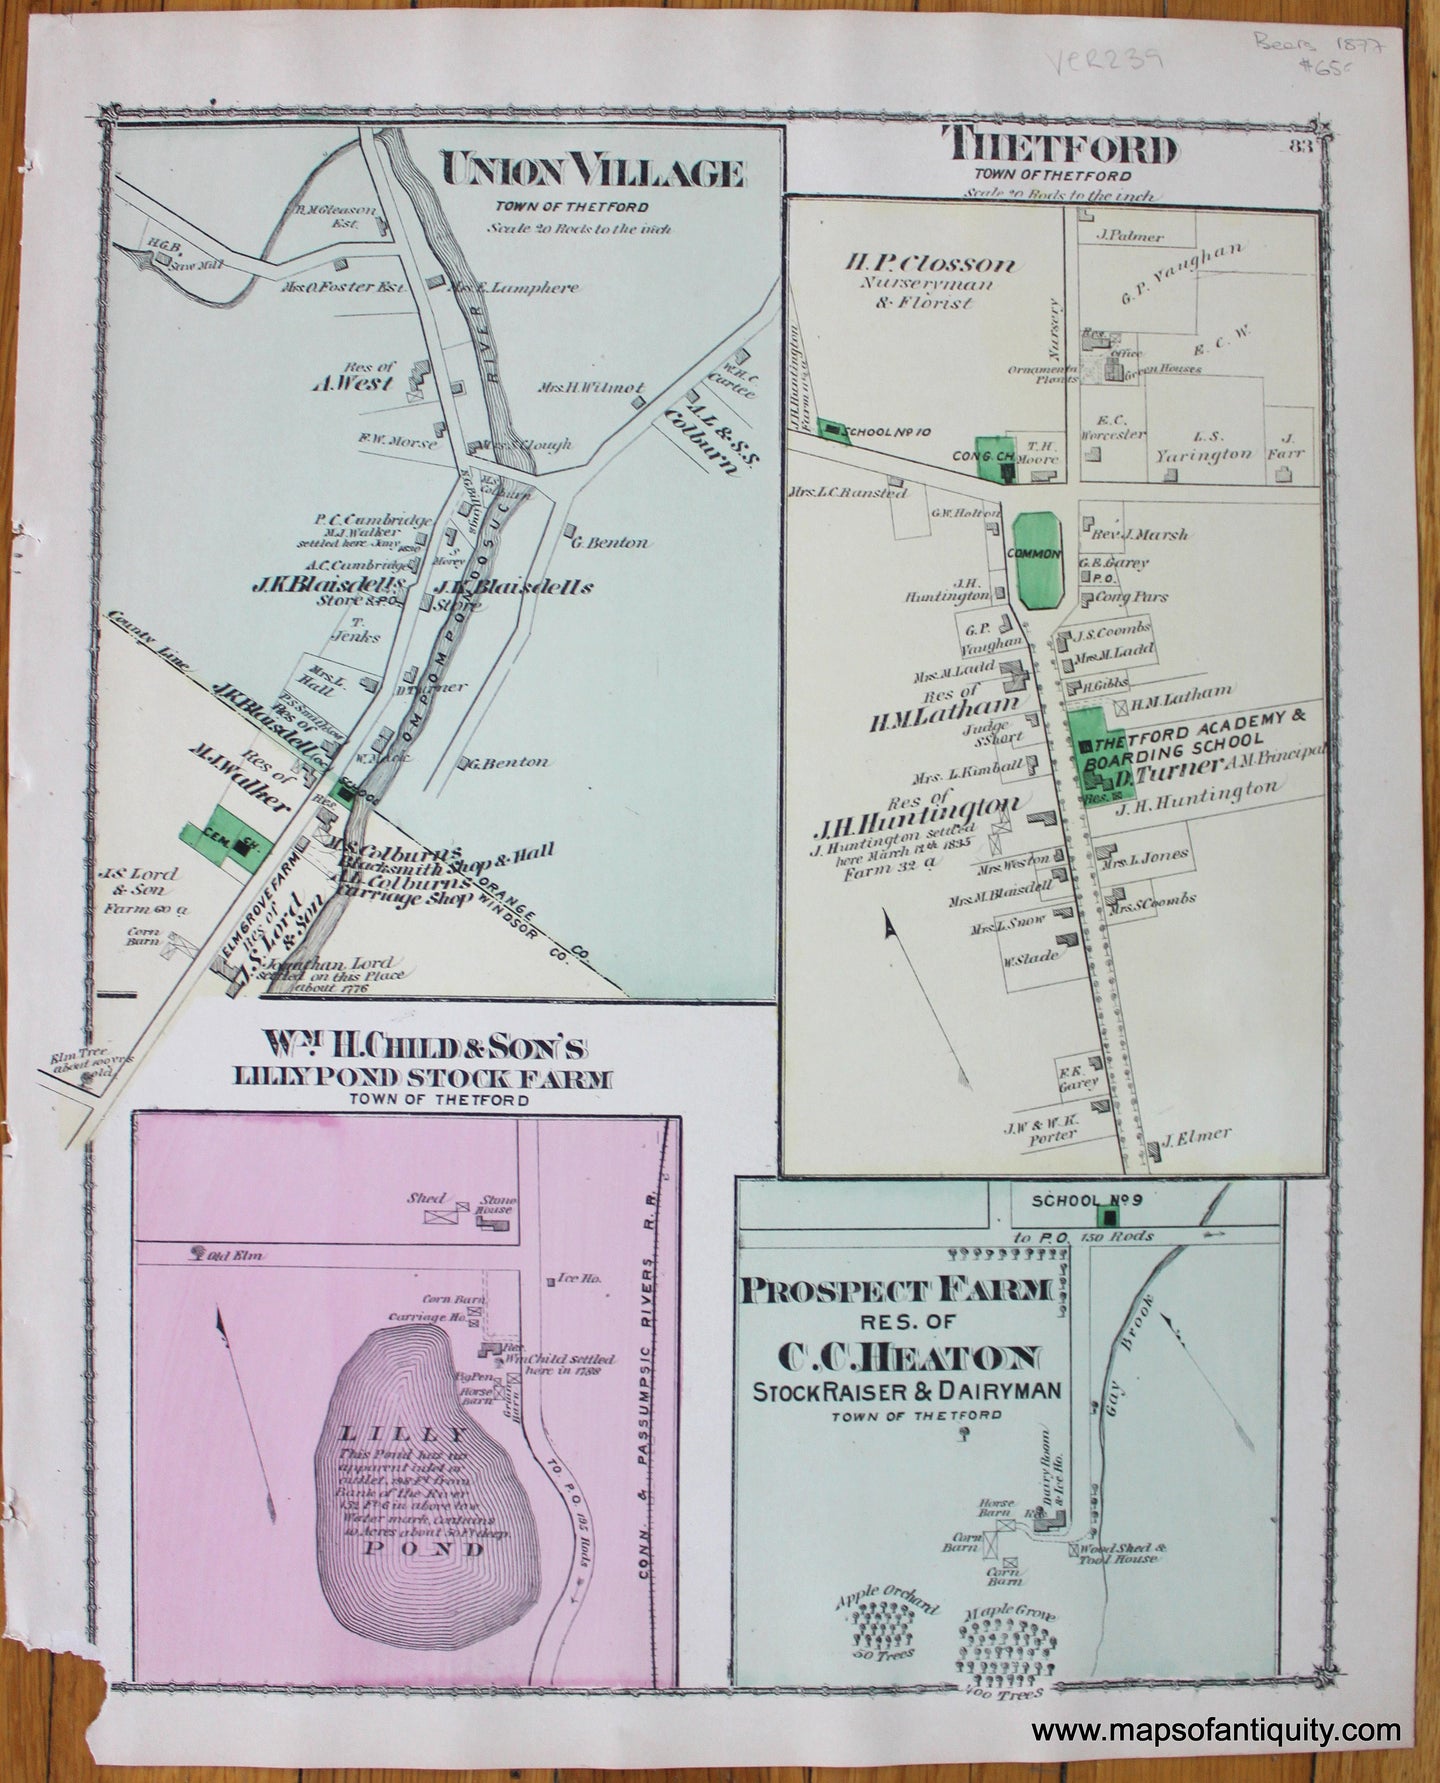 Union-Village-Thetford-Wm.-H.Child-&-Son's-Lilly-Pond-Stock-Farm-Prospect-Farm-Res.-of-C.C.-Heaton-Stock-Raiser-and-Dairyman-1877-Beers-Antique-Map-Vermont-Orange-County-1870s-1800s-19th-century-Maps-of-Antiquity